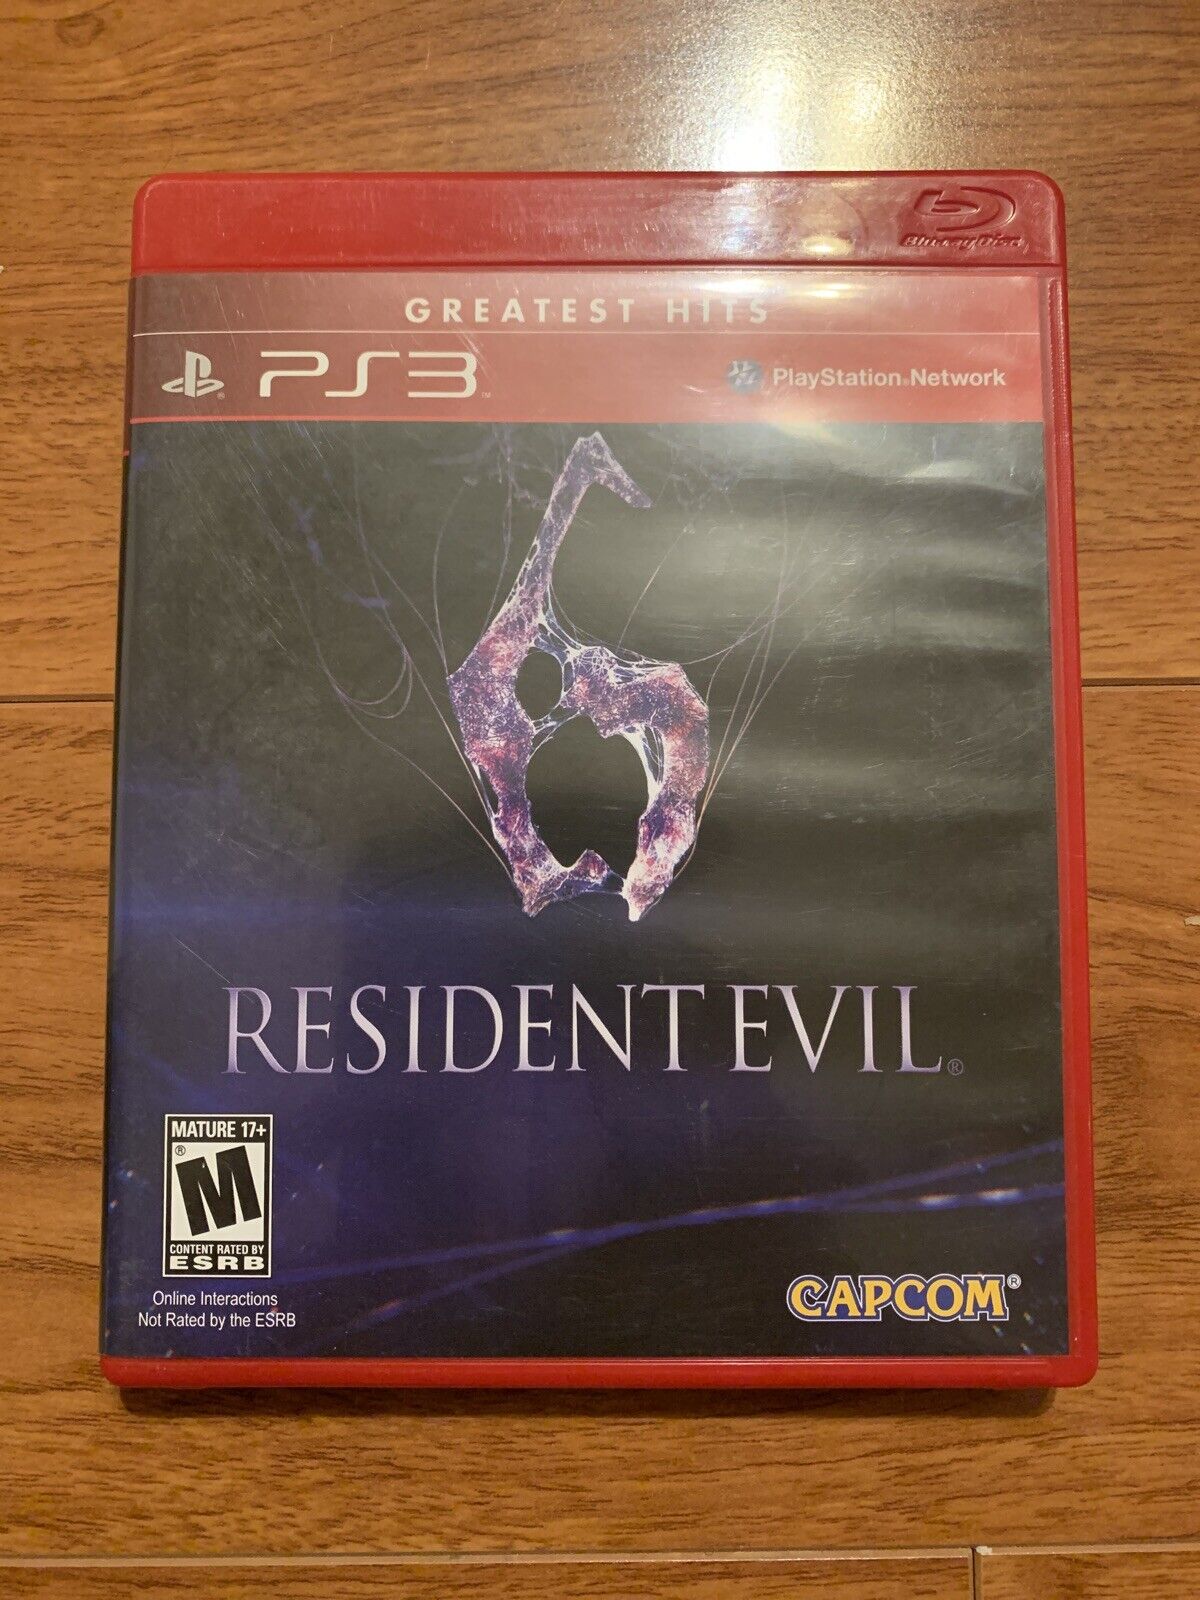 veronderstellen maagpijn Ongemak Resident Evil 6 PS3 Playstation 3 Greatest Hits Capcom Video Game  13388340477 | eBay